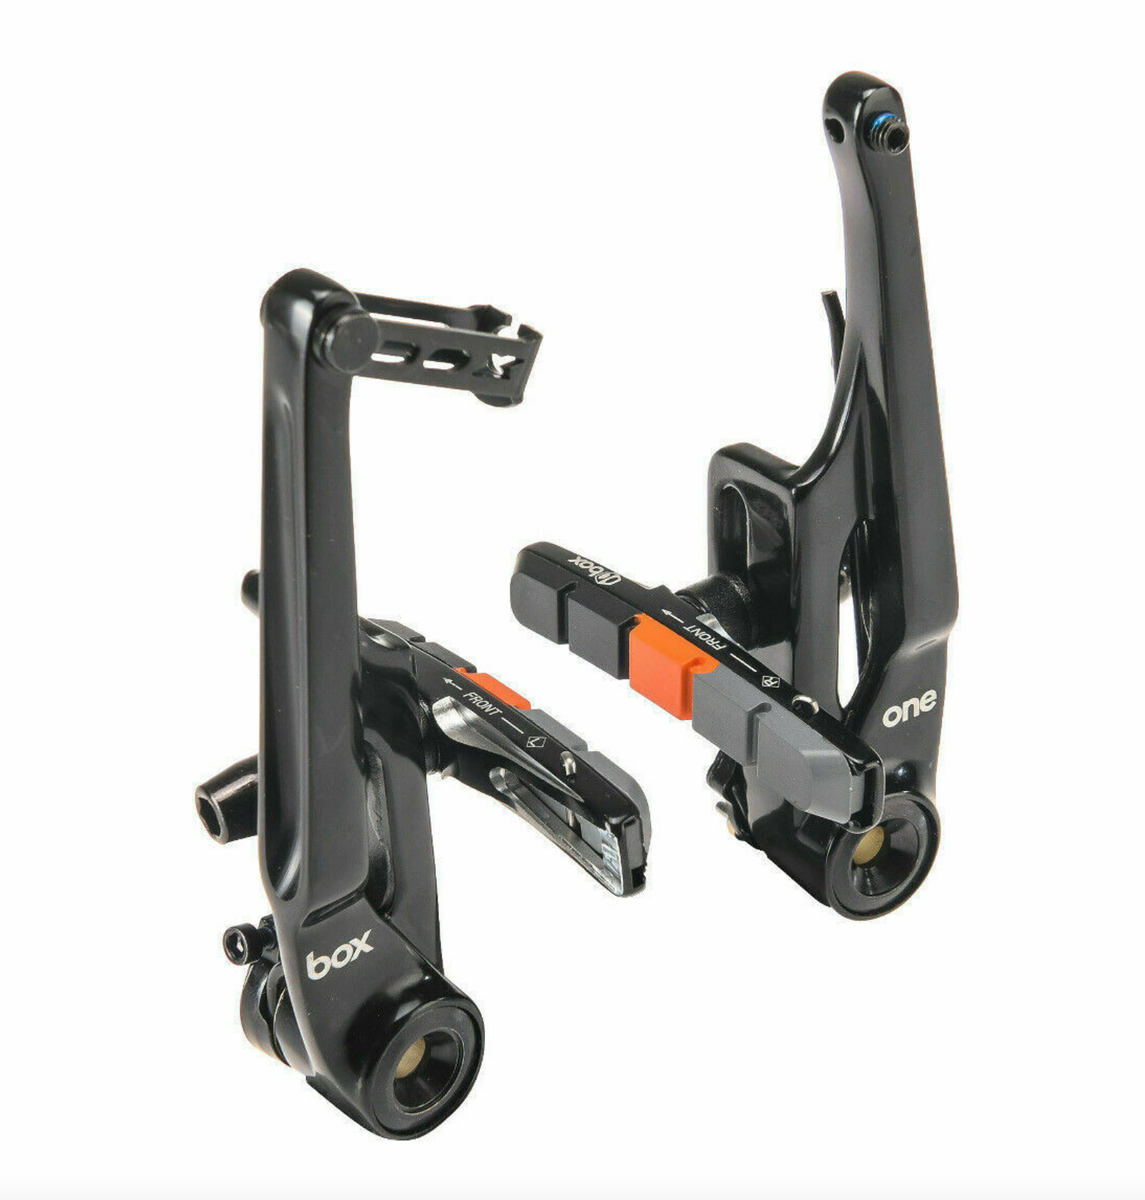 Apse MV993DG Linear Pull V-Brake Caliper - Black -  / C&W Cycle